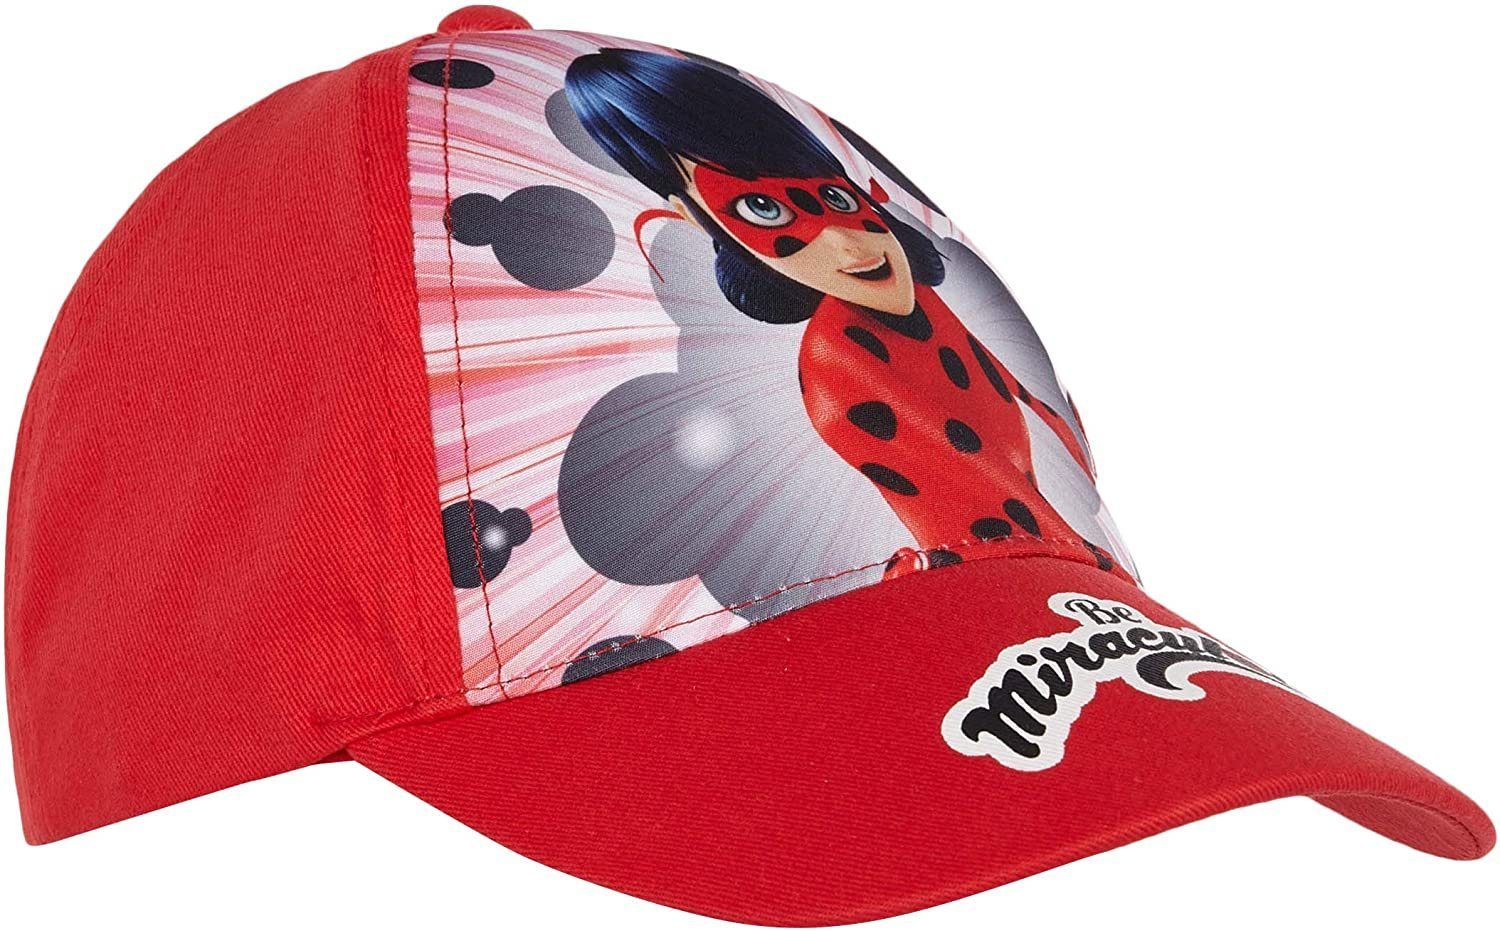 Miraculous - Ladybug Schirmmütze Ladybug Miraculous Baseball Cap Mütze Mädchen Schirmmütze Kinder Sonnenschutz Schule Kita Gr.52 + 54 Rot